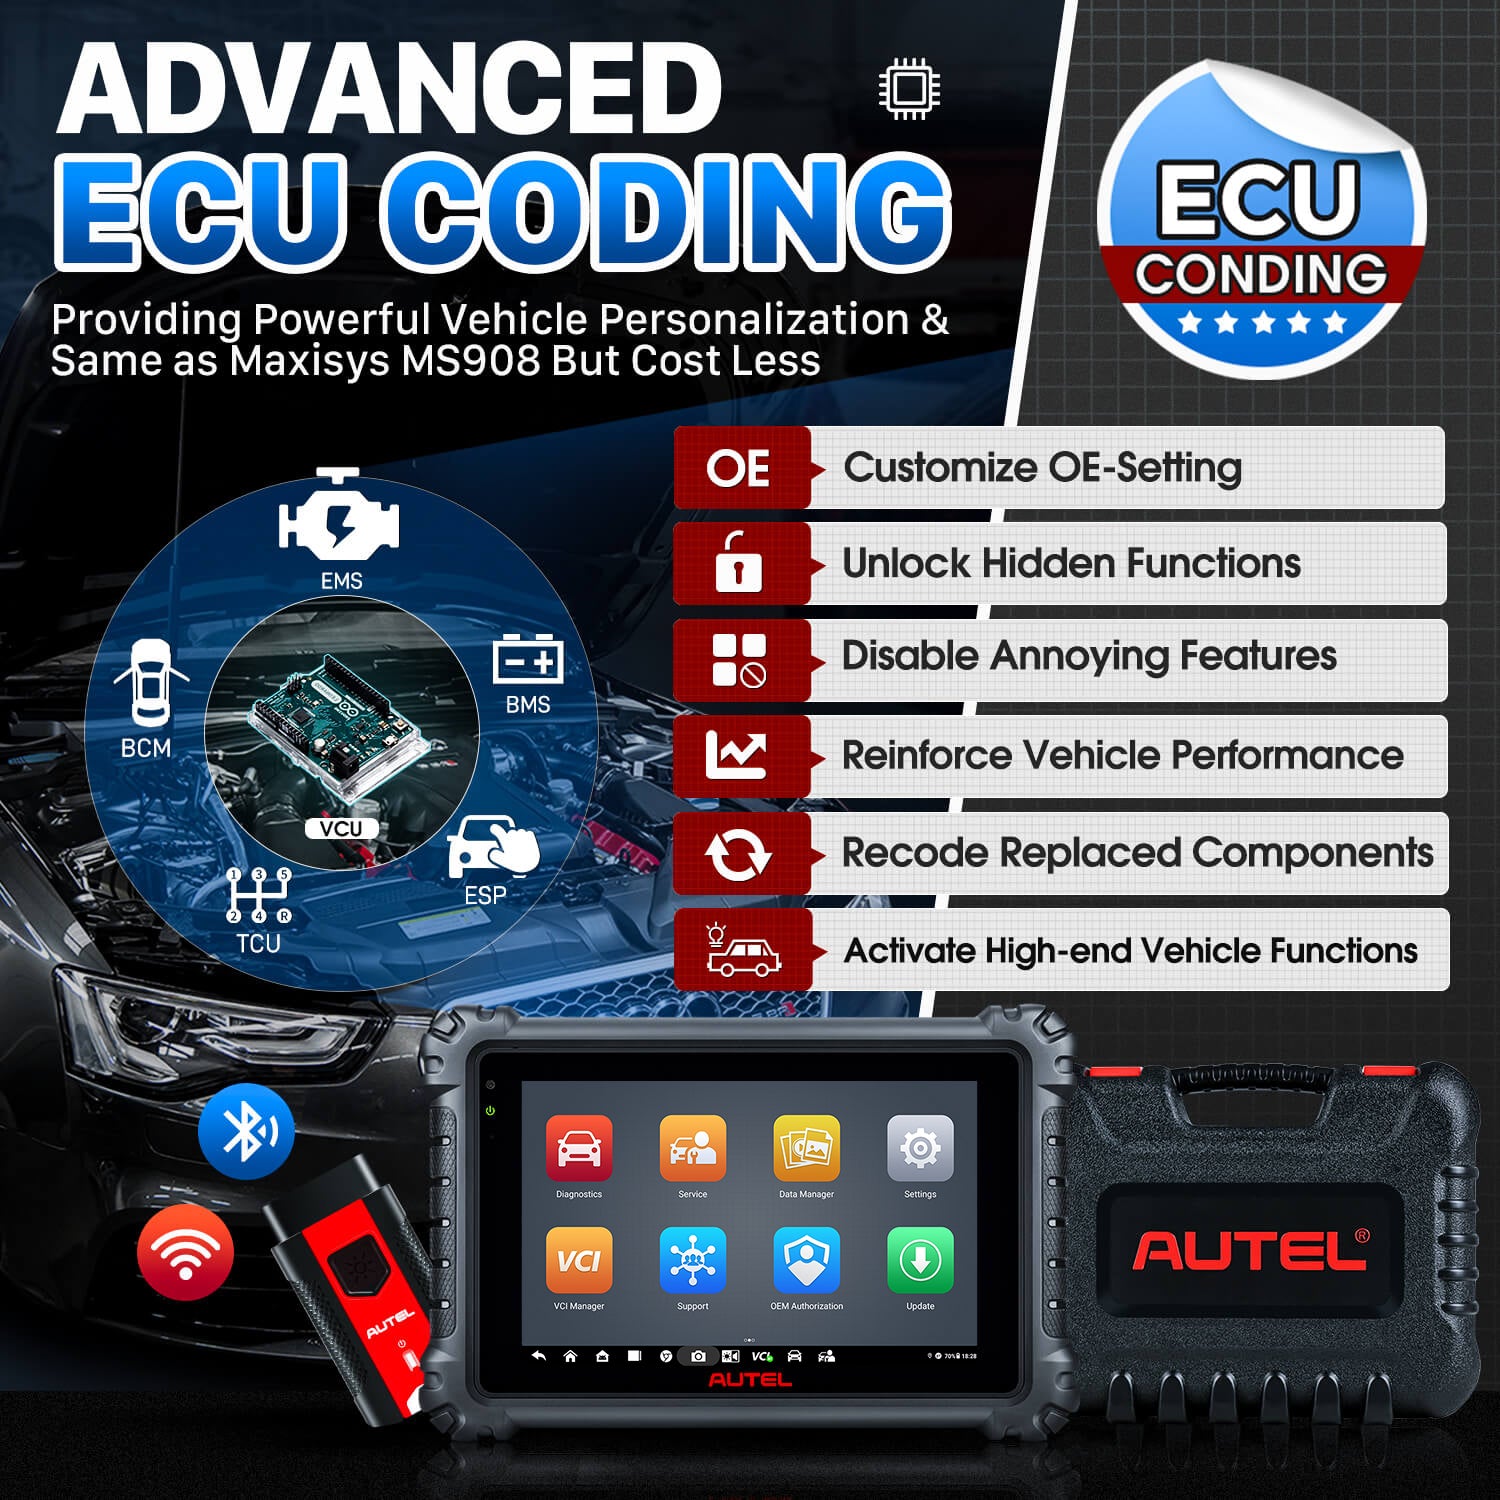 Autel MK906S Pro Advanced ECU Coding